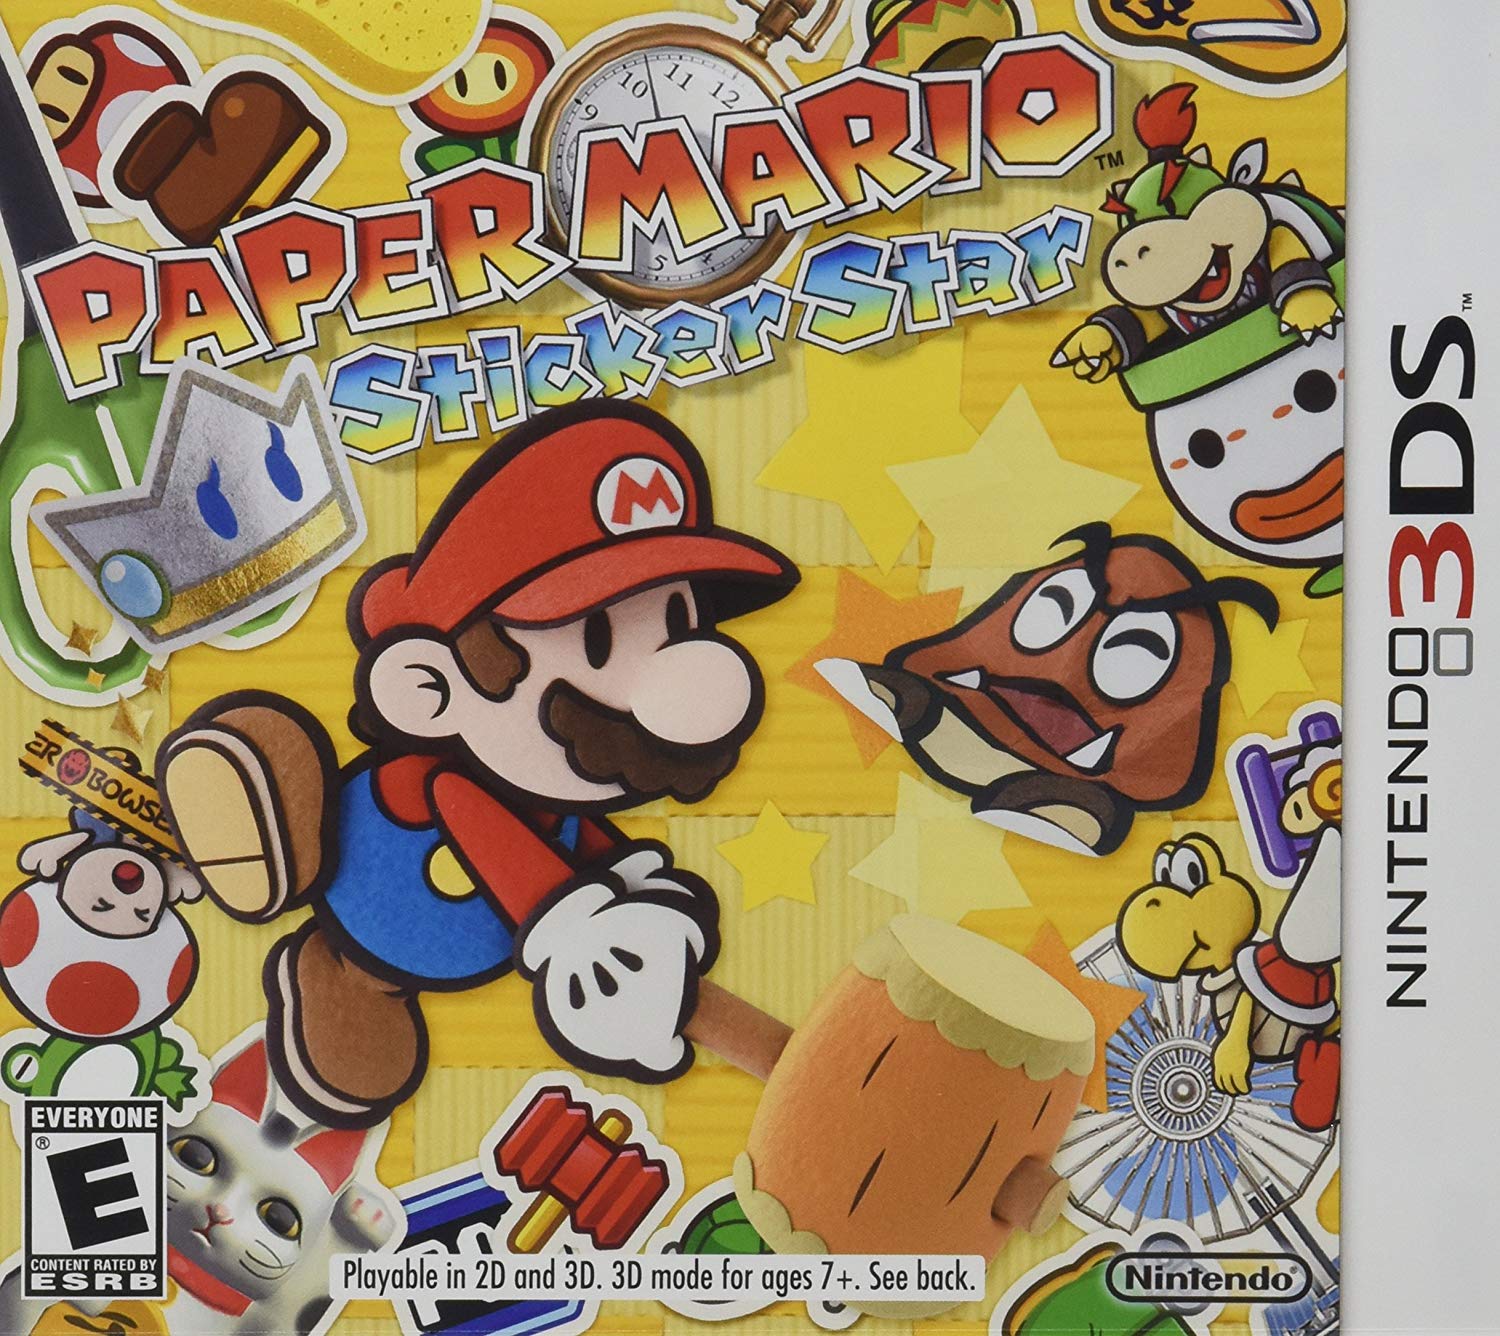 Paper Mario Sticker Star 3DS - image 1 of 7